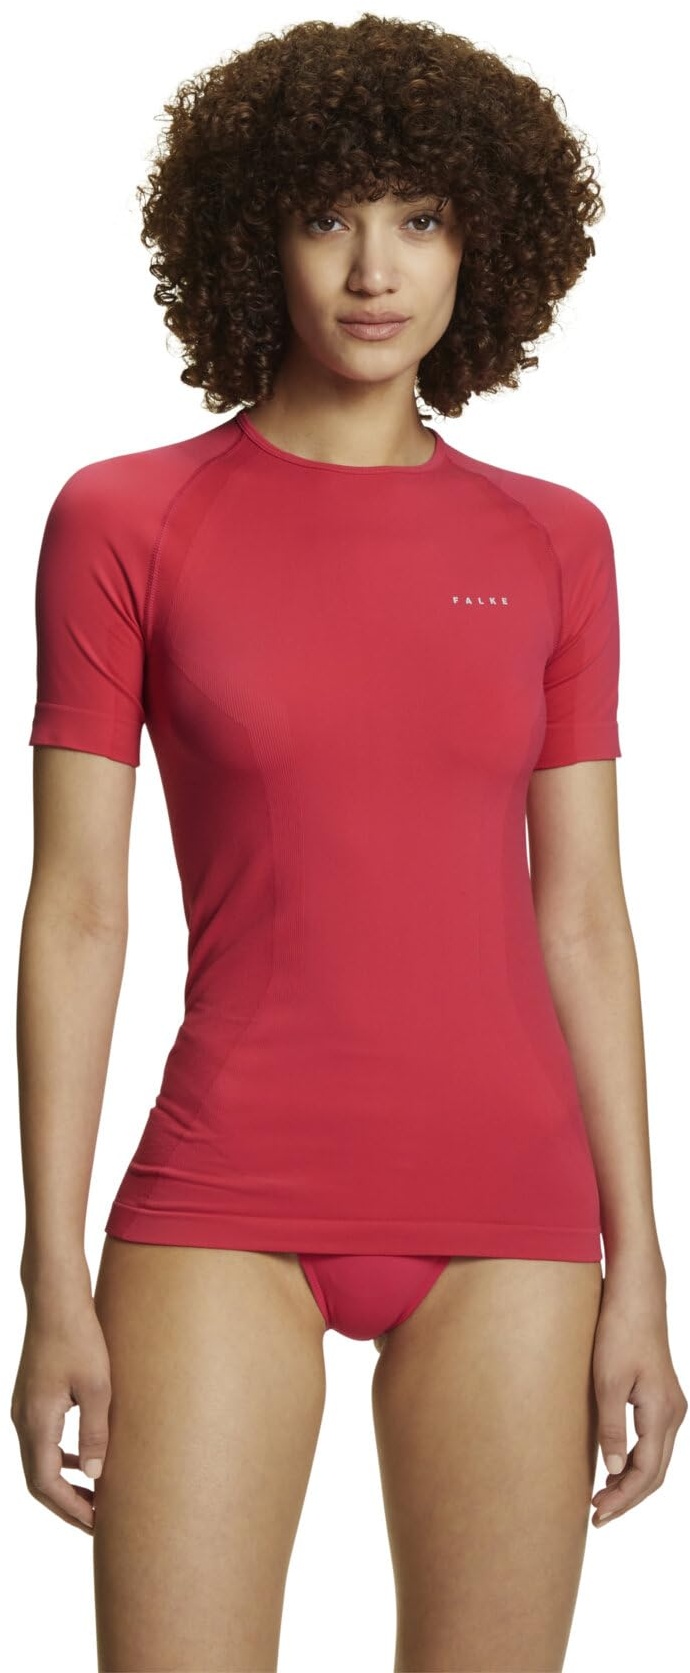 FALKE Damen Baselayer-Shirt Warm Trend Uni Round Neck W S/S SH Funktionsmaterial Schnelltrocknend 1 Stück, Rot (Rose 8564), XS